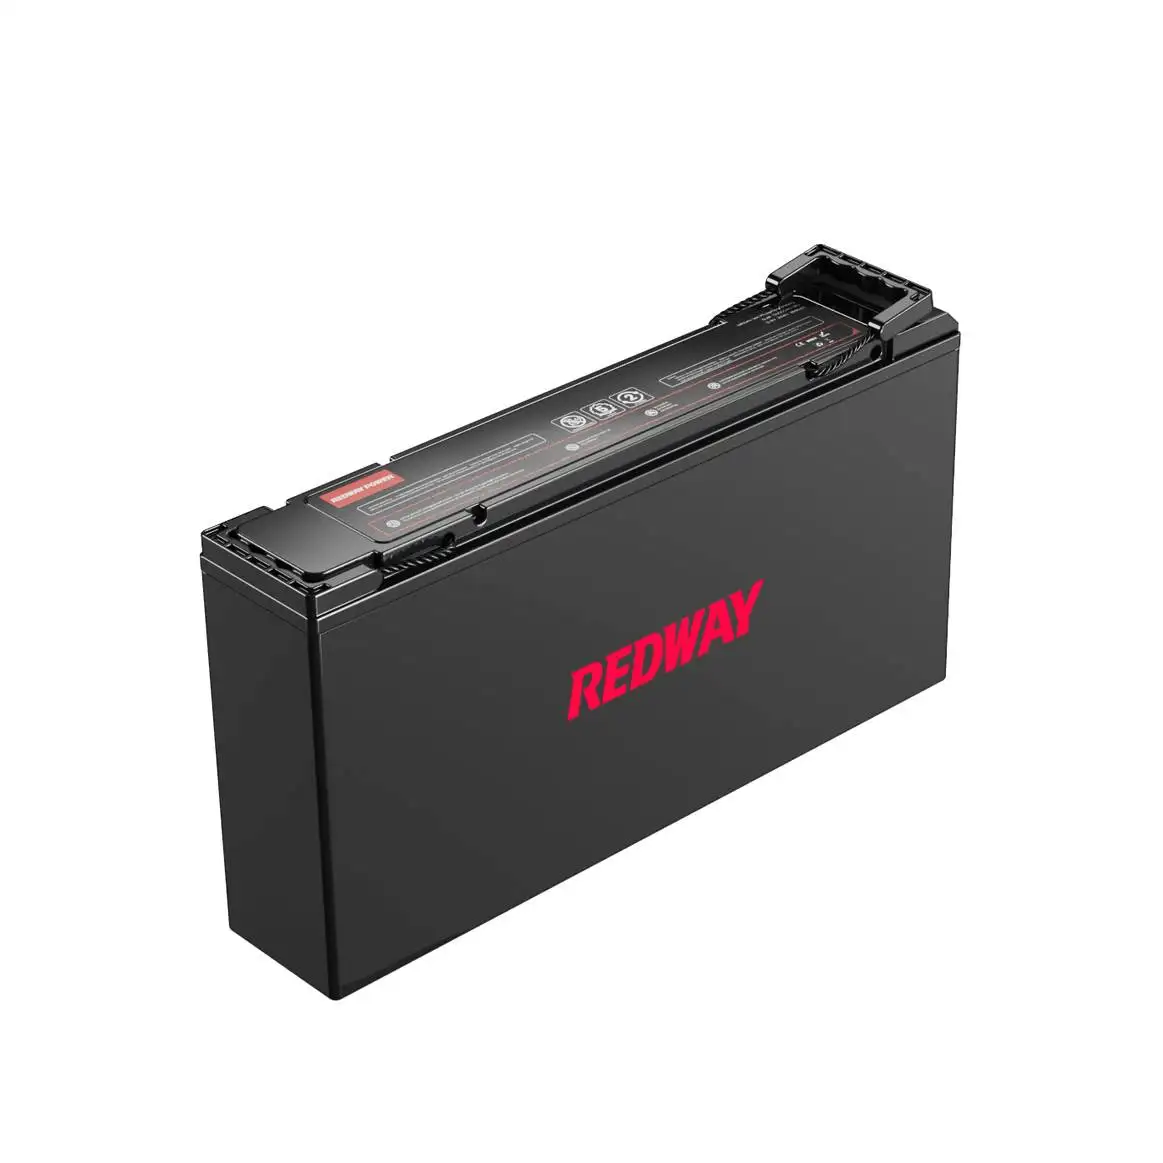 redway-12v150ah-eu | Redway Battery